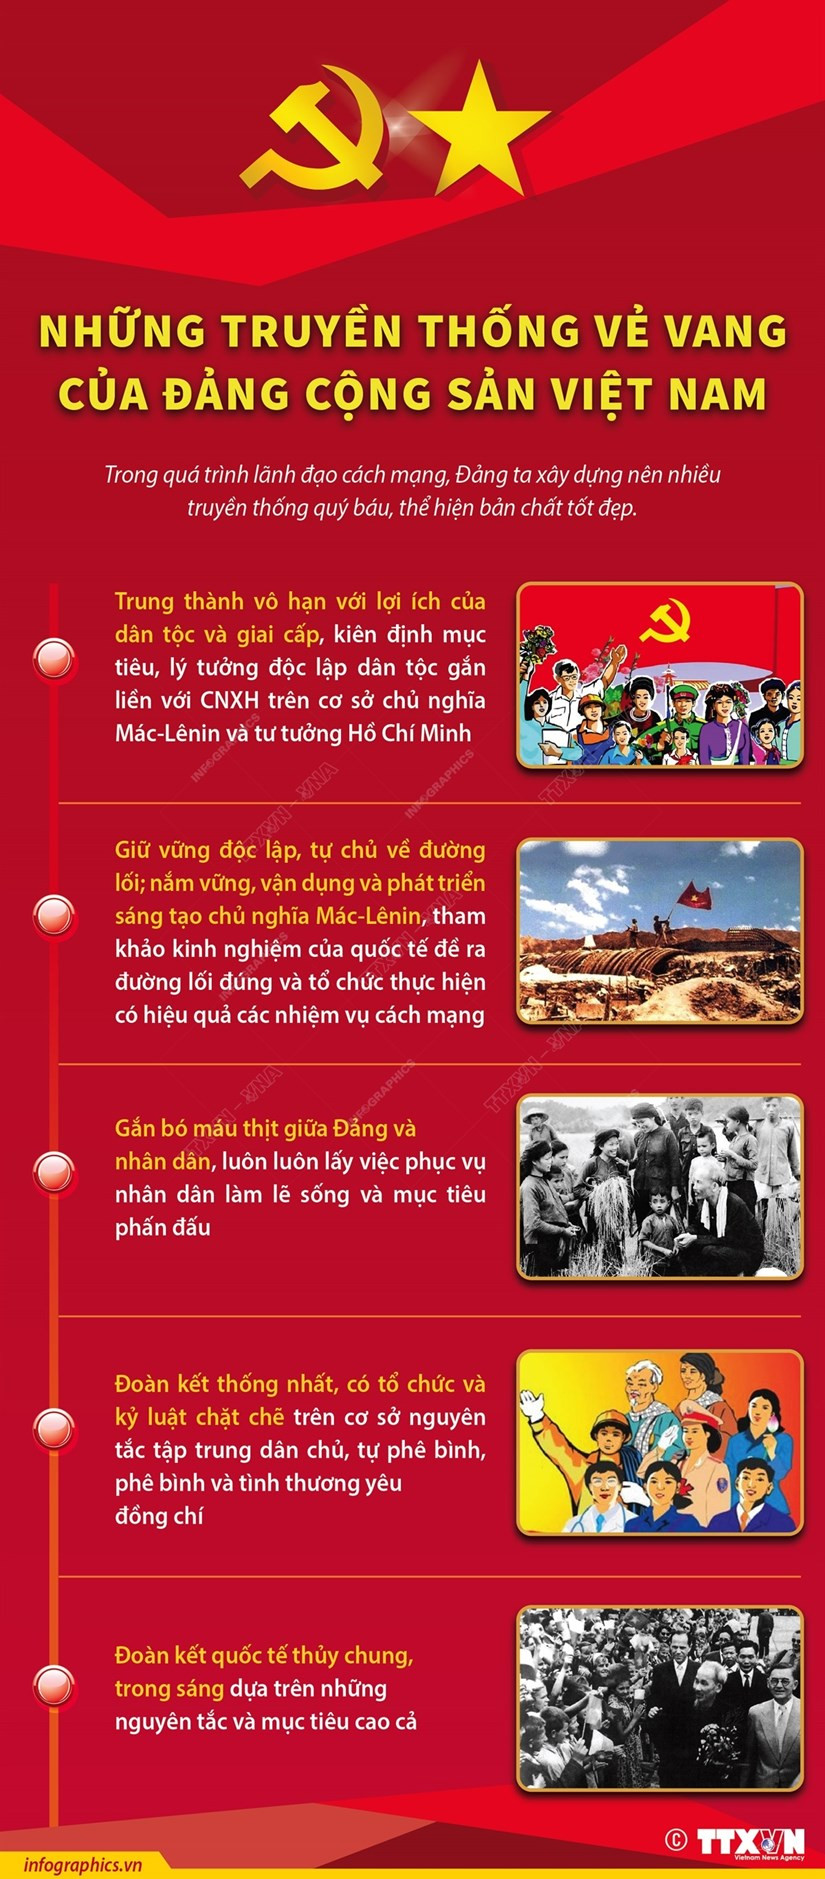 [Infographics] Nhung truyen thong ve vang cua Dang Cong san Viet Nam hinh anh 1